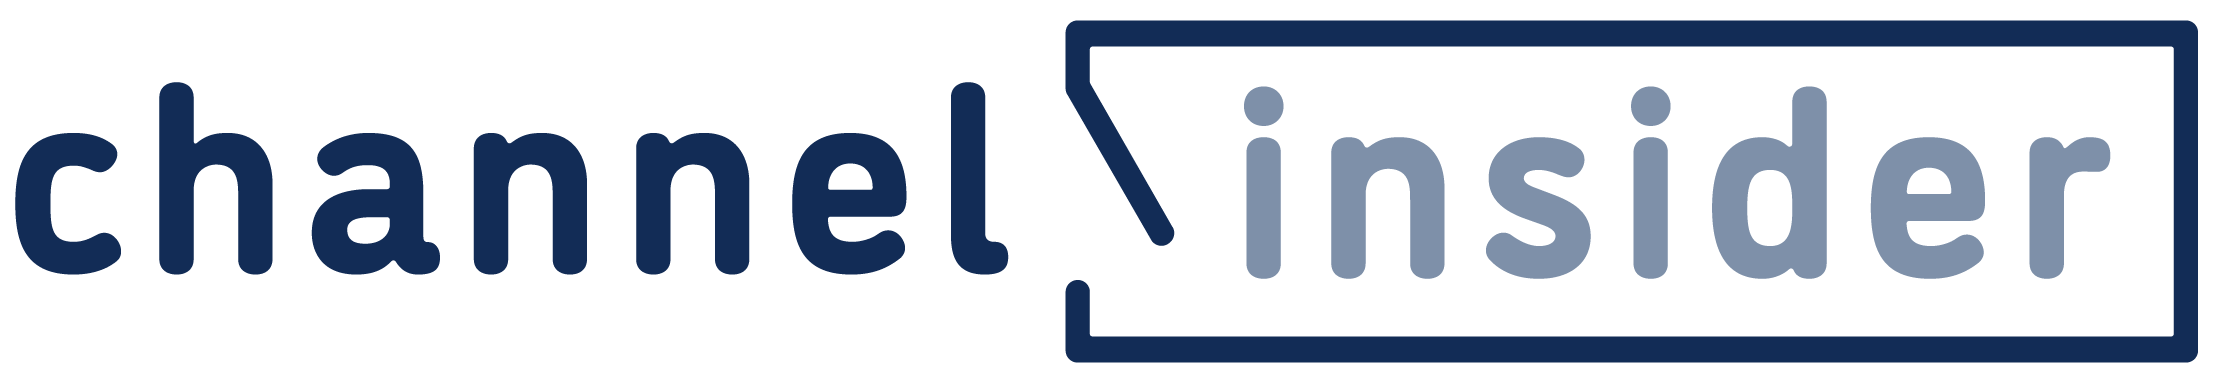 channel-insider-logo